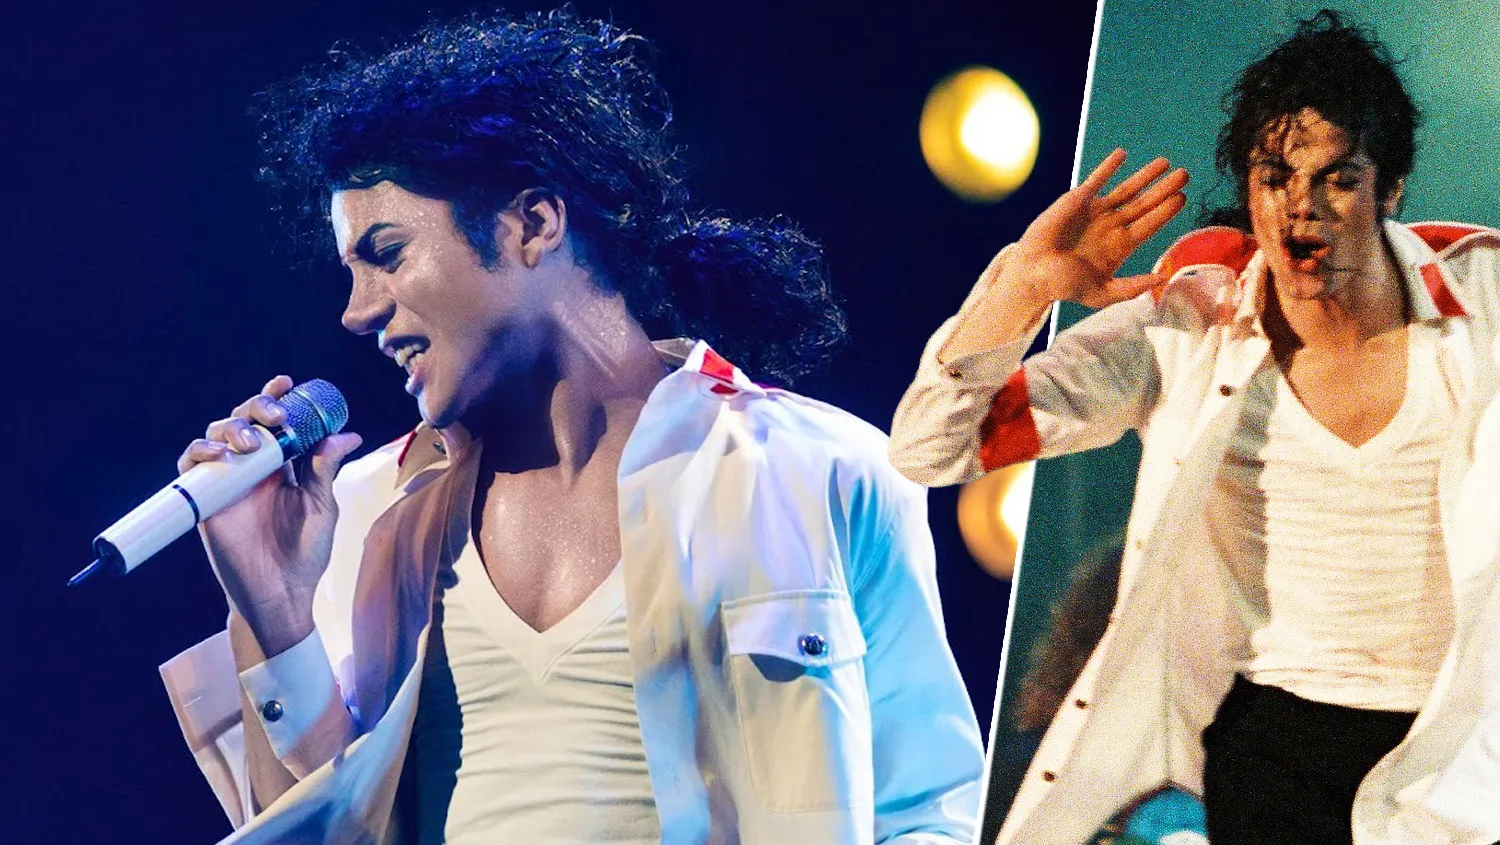 Michael Jackson performing the moonwalk on stage